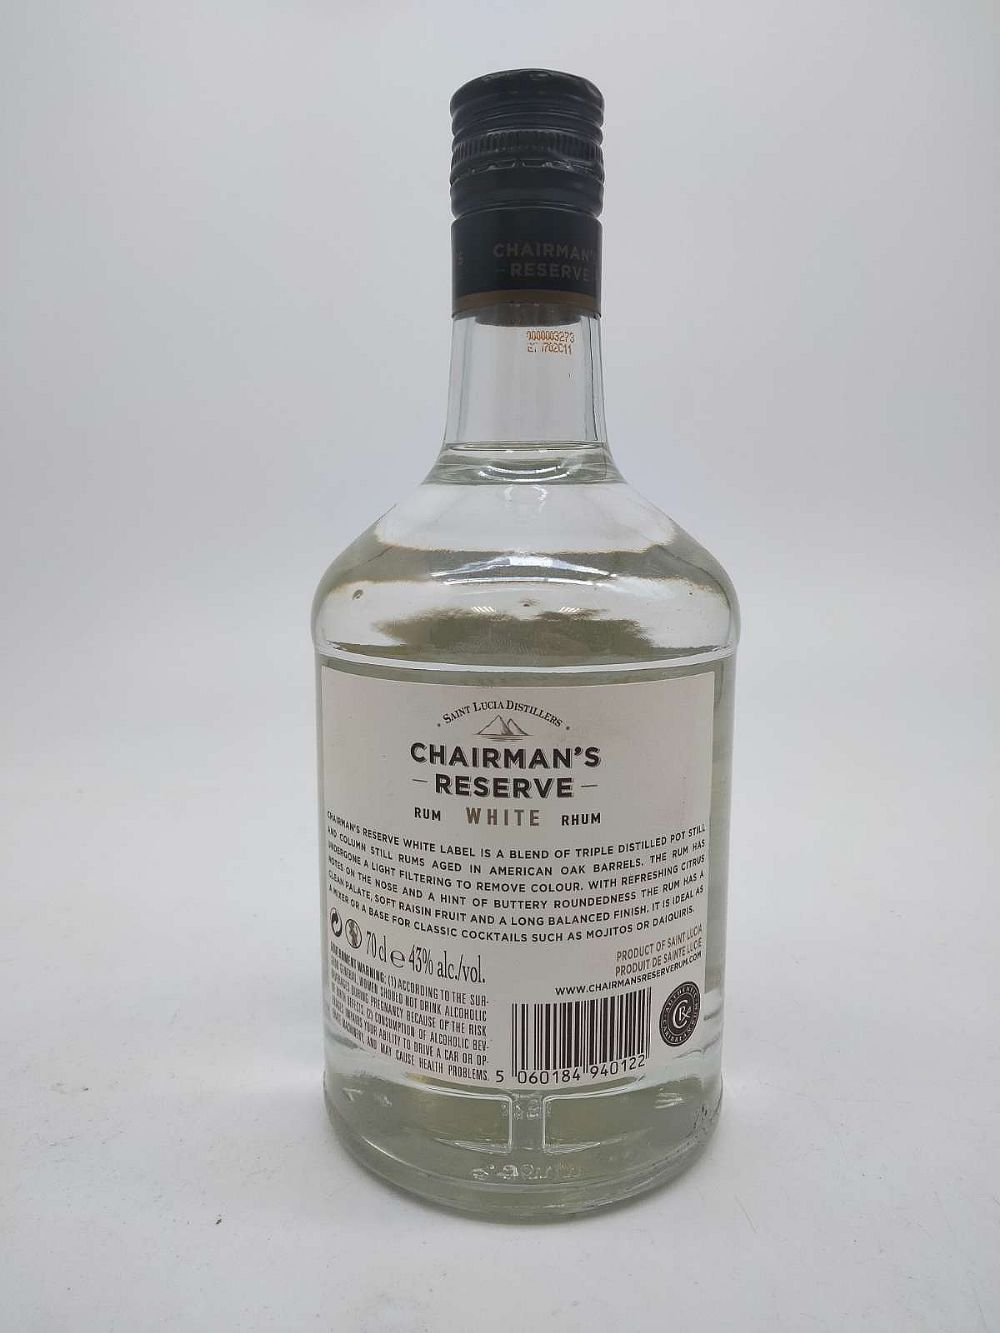 Saint Lucia Distillers Chairman\'s Reserve White Rum | Whiskey Bidders |  Irish Whiskey Auction Online Platform